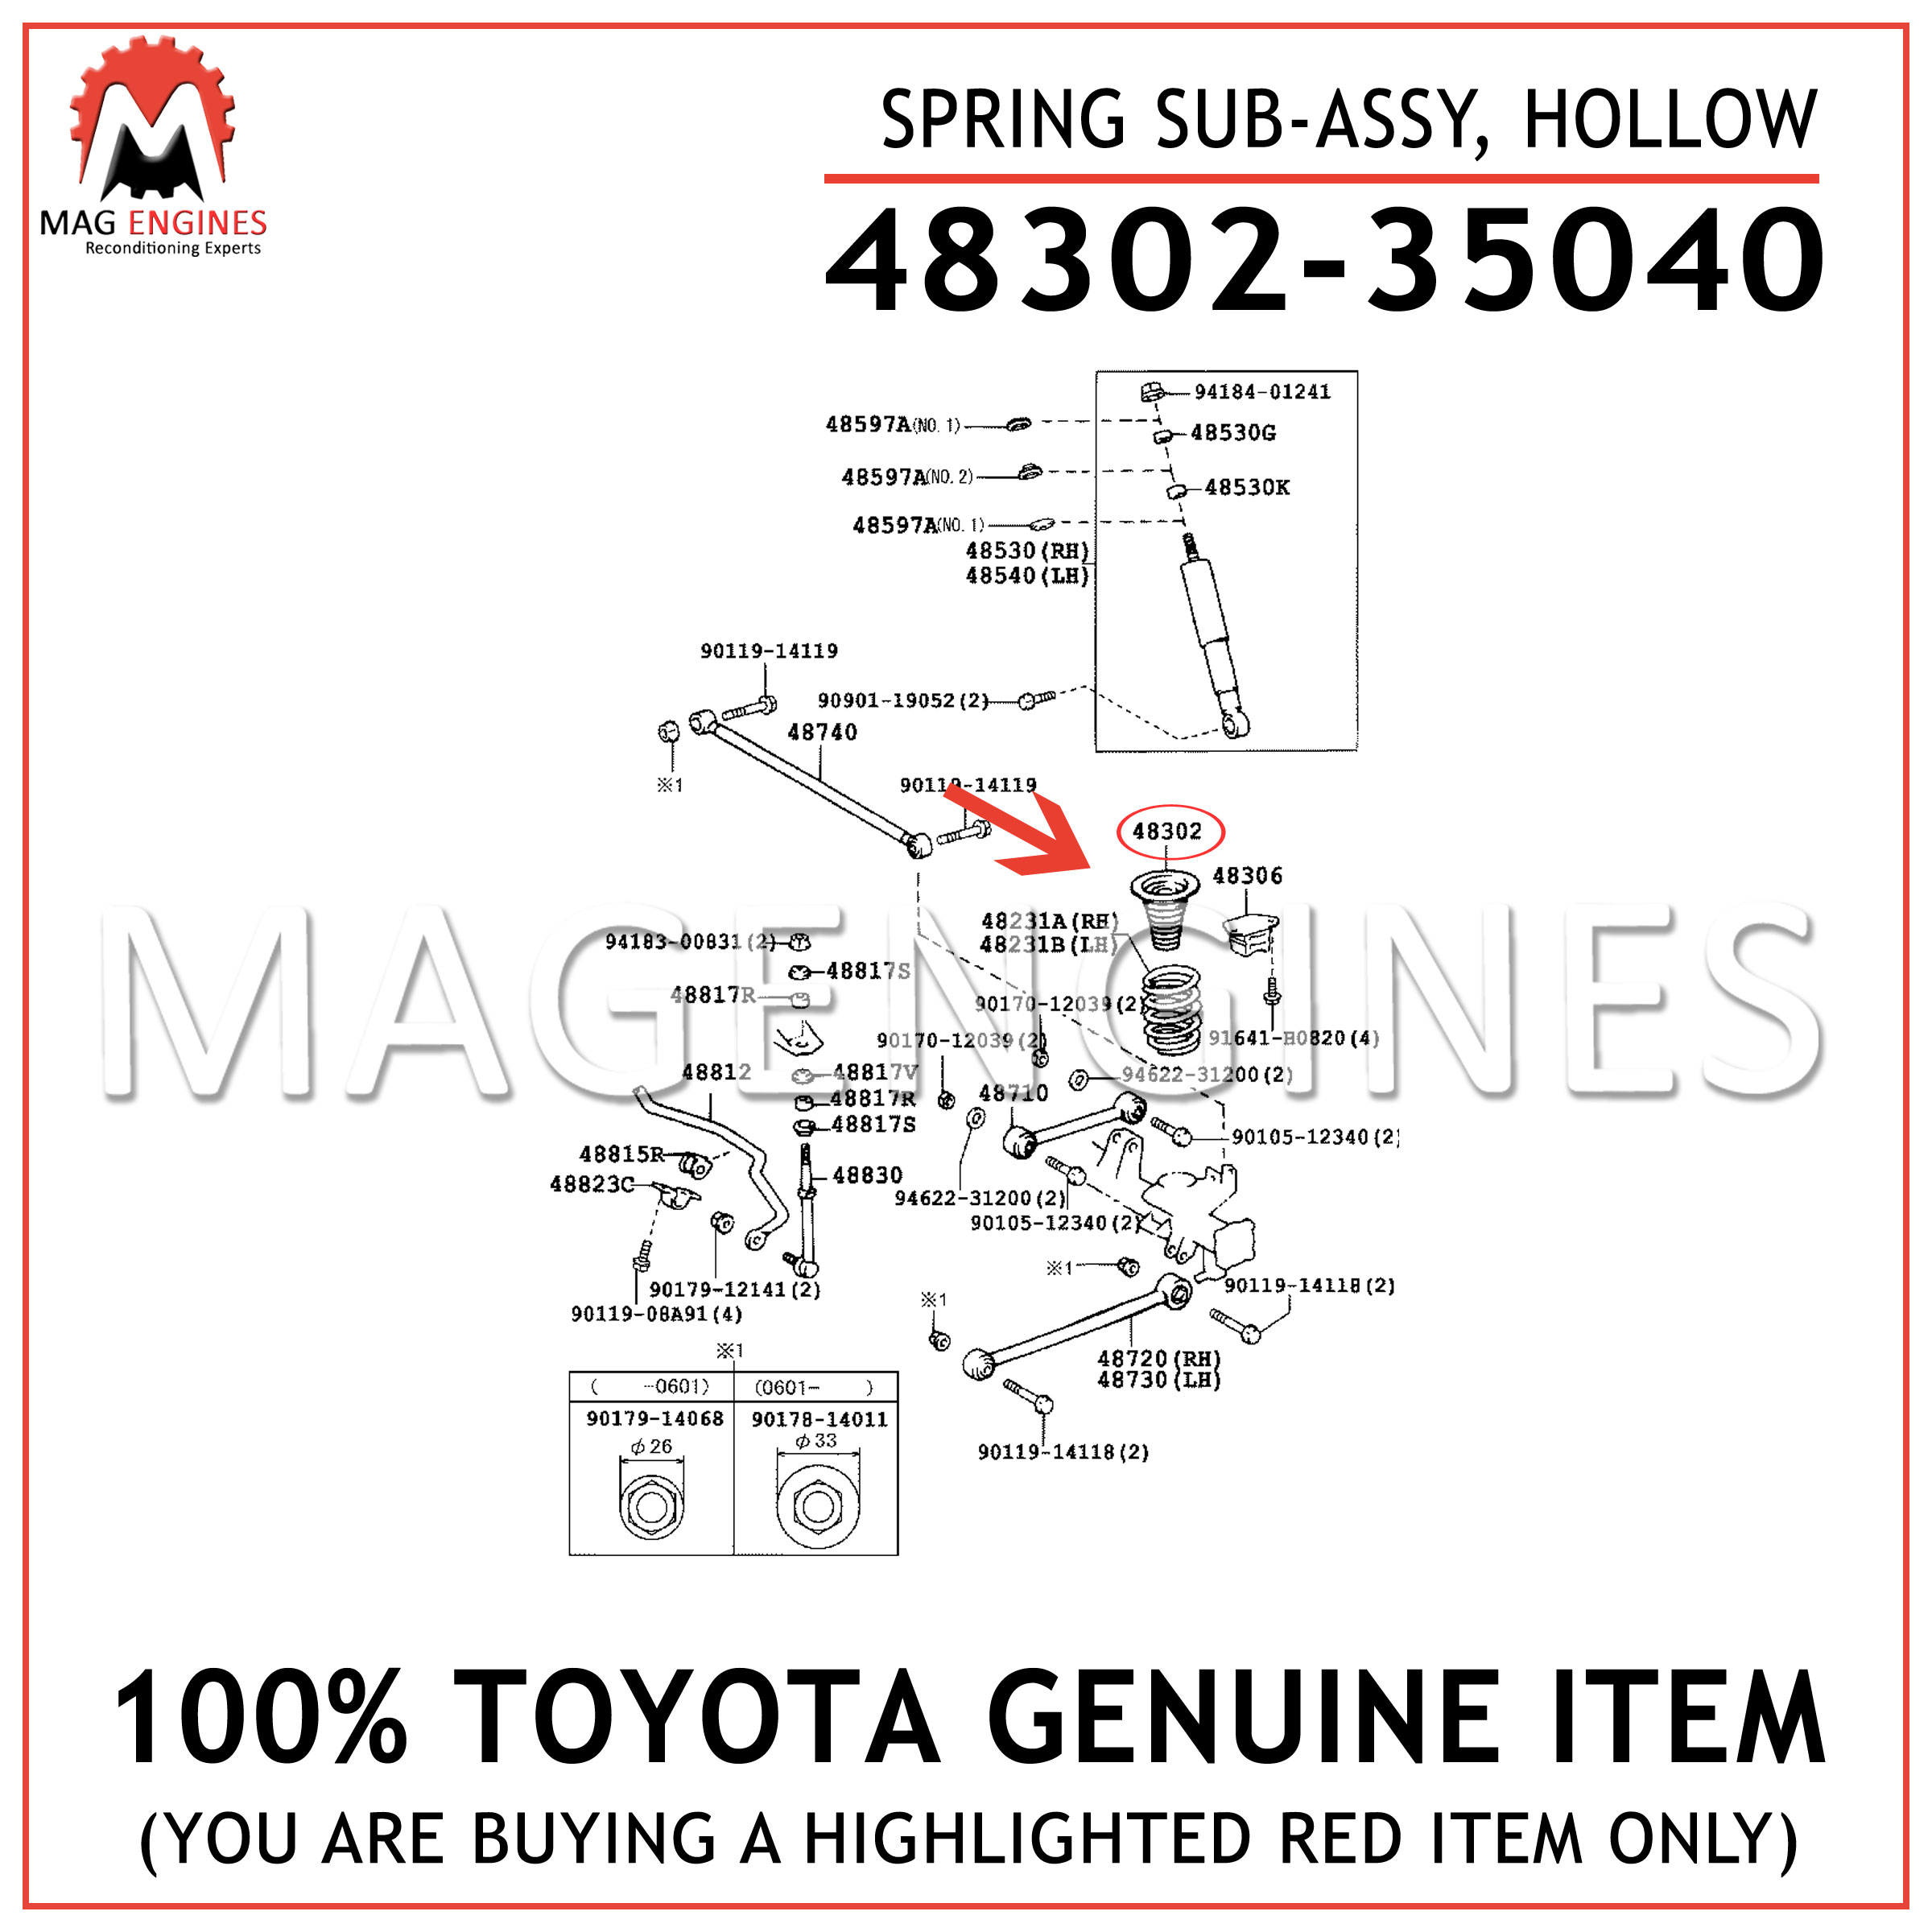 HOLLOW 48302-35040 4830235040 Genuine Toyota SPRING SUB-ASSY